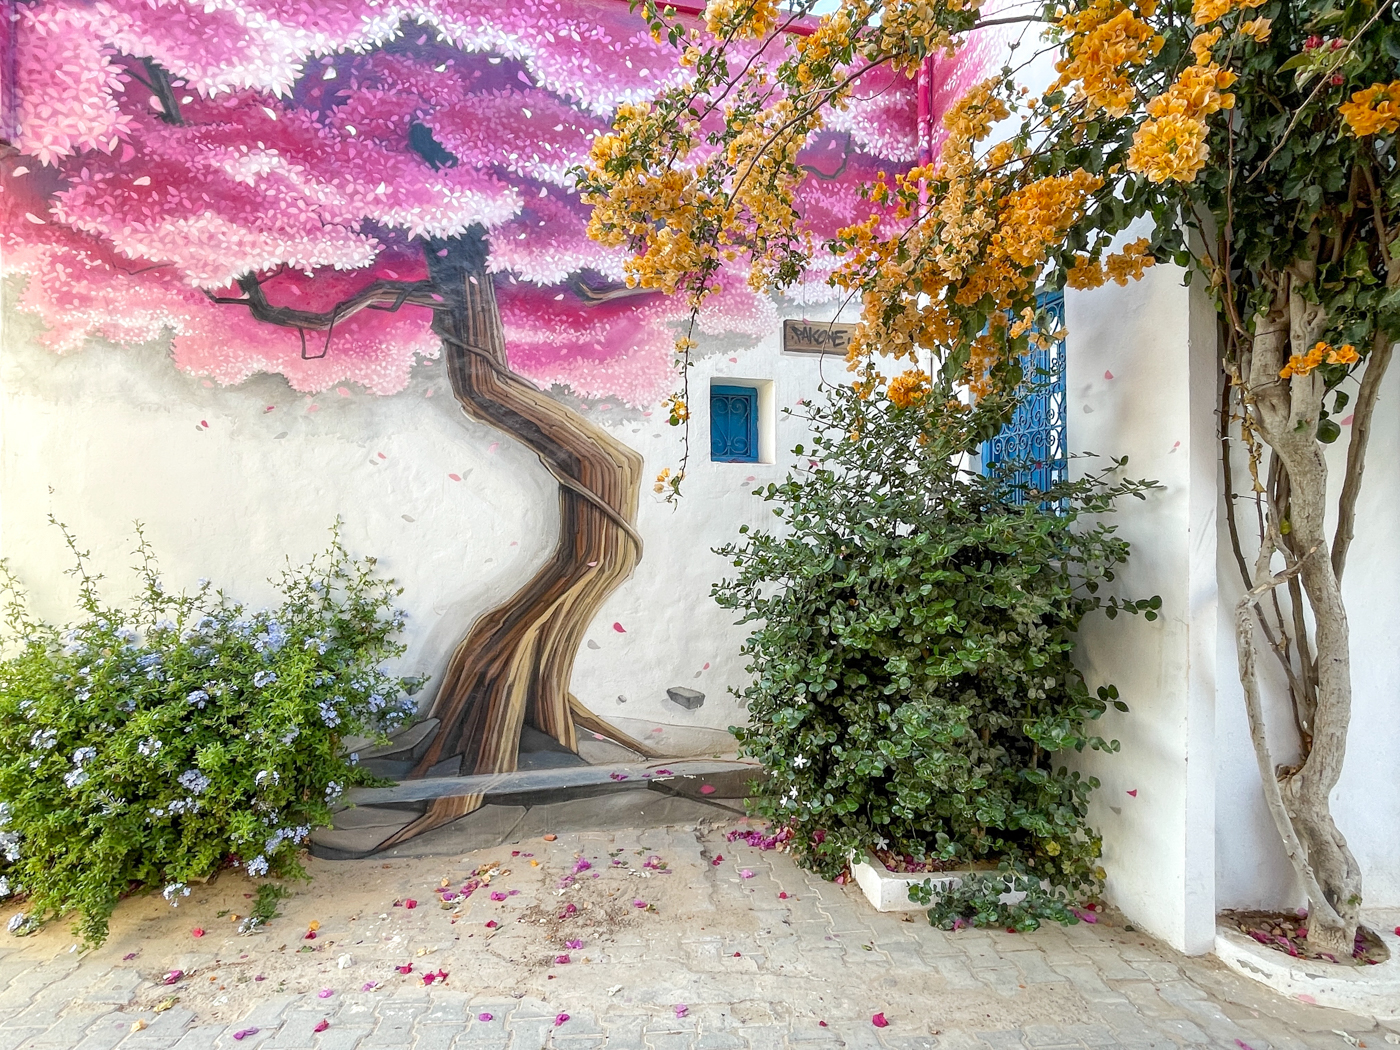 Arbre en street art - Quoi faire à Djerba